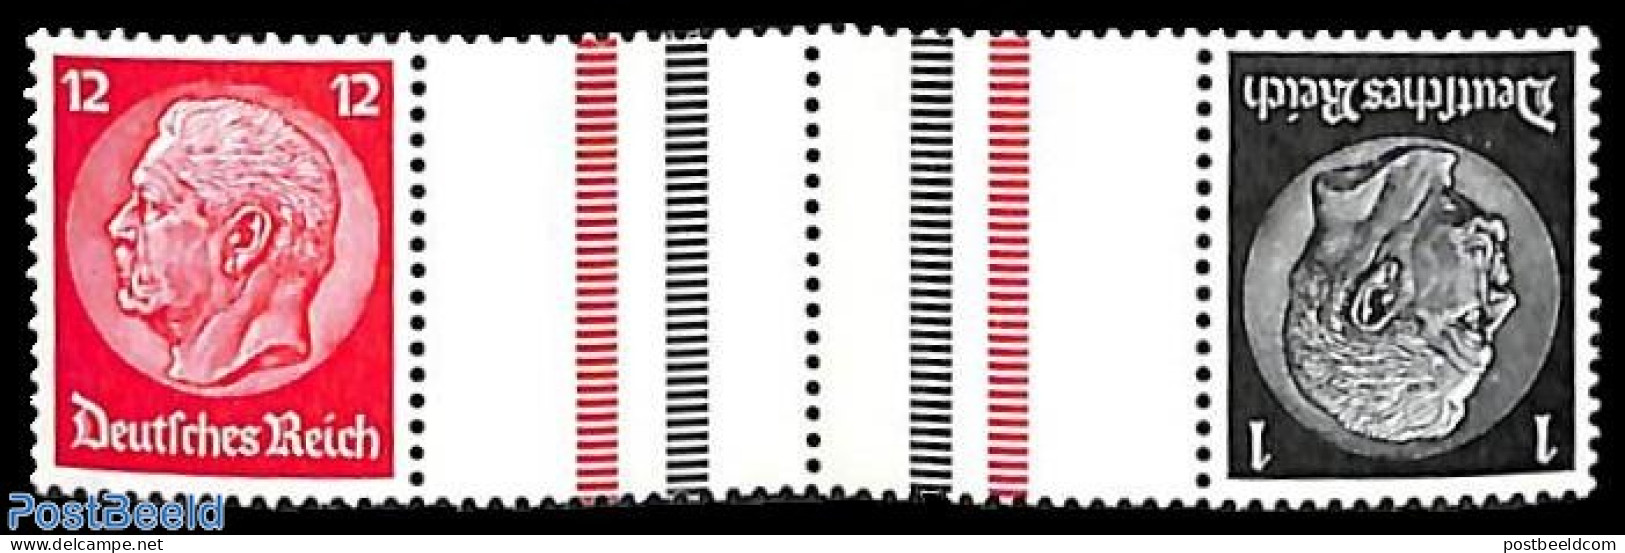 Germany, Empire 1937 1pf+tab+tab+12pf, Mint NH - Unused Stamps